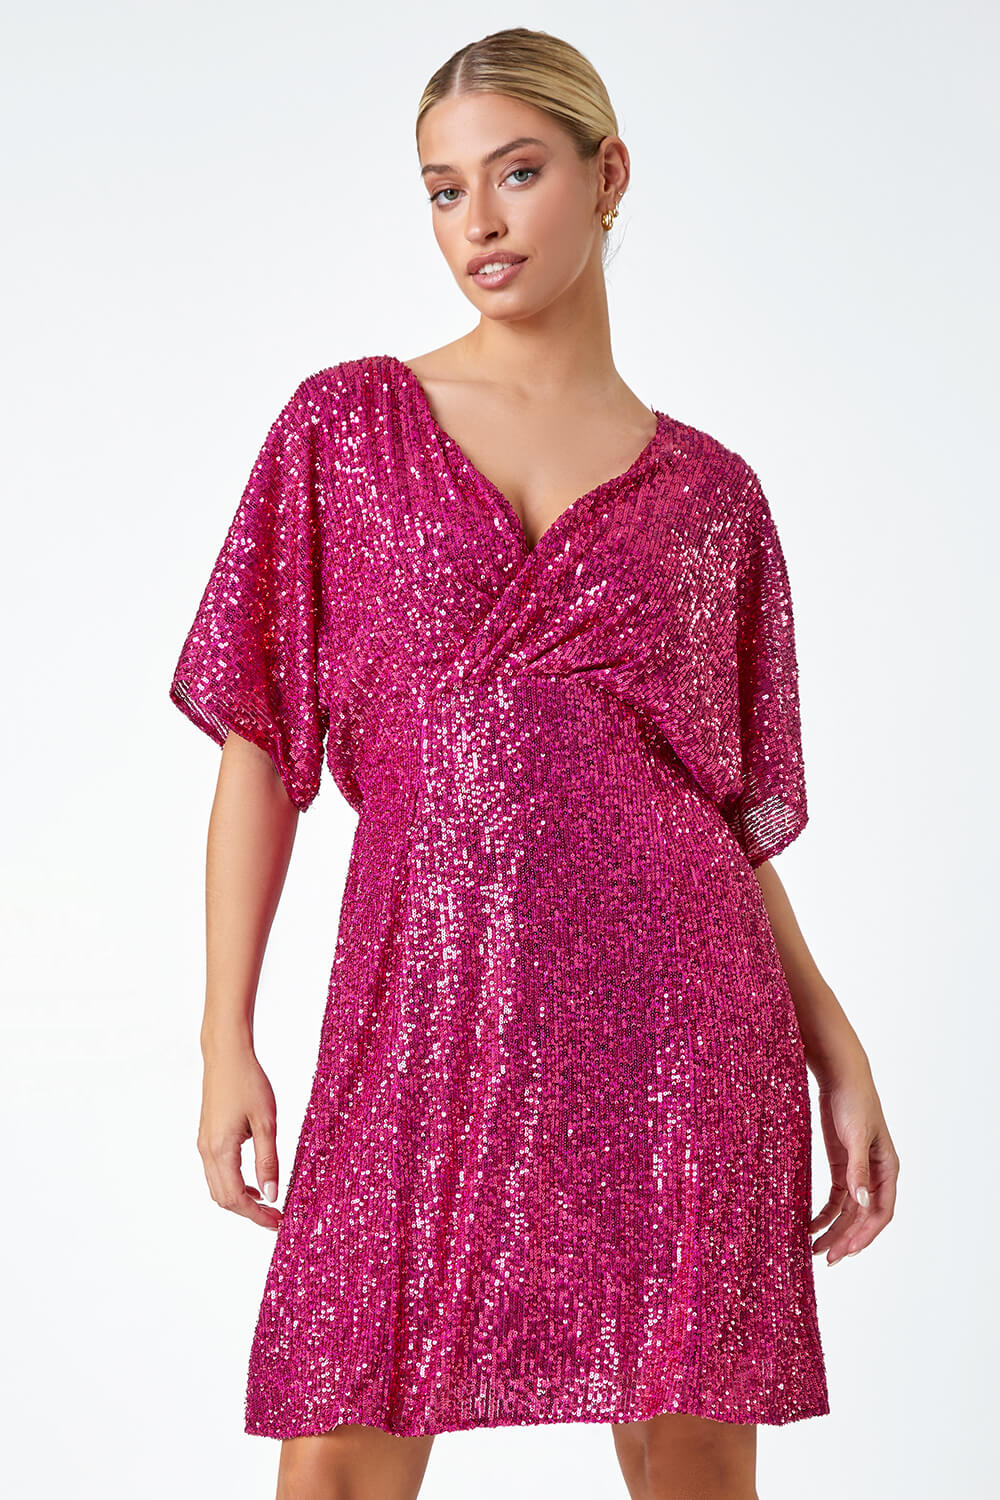 PINK Sequin Embellished Wrap Stretch Dress, Image 4 of 6